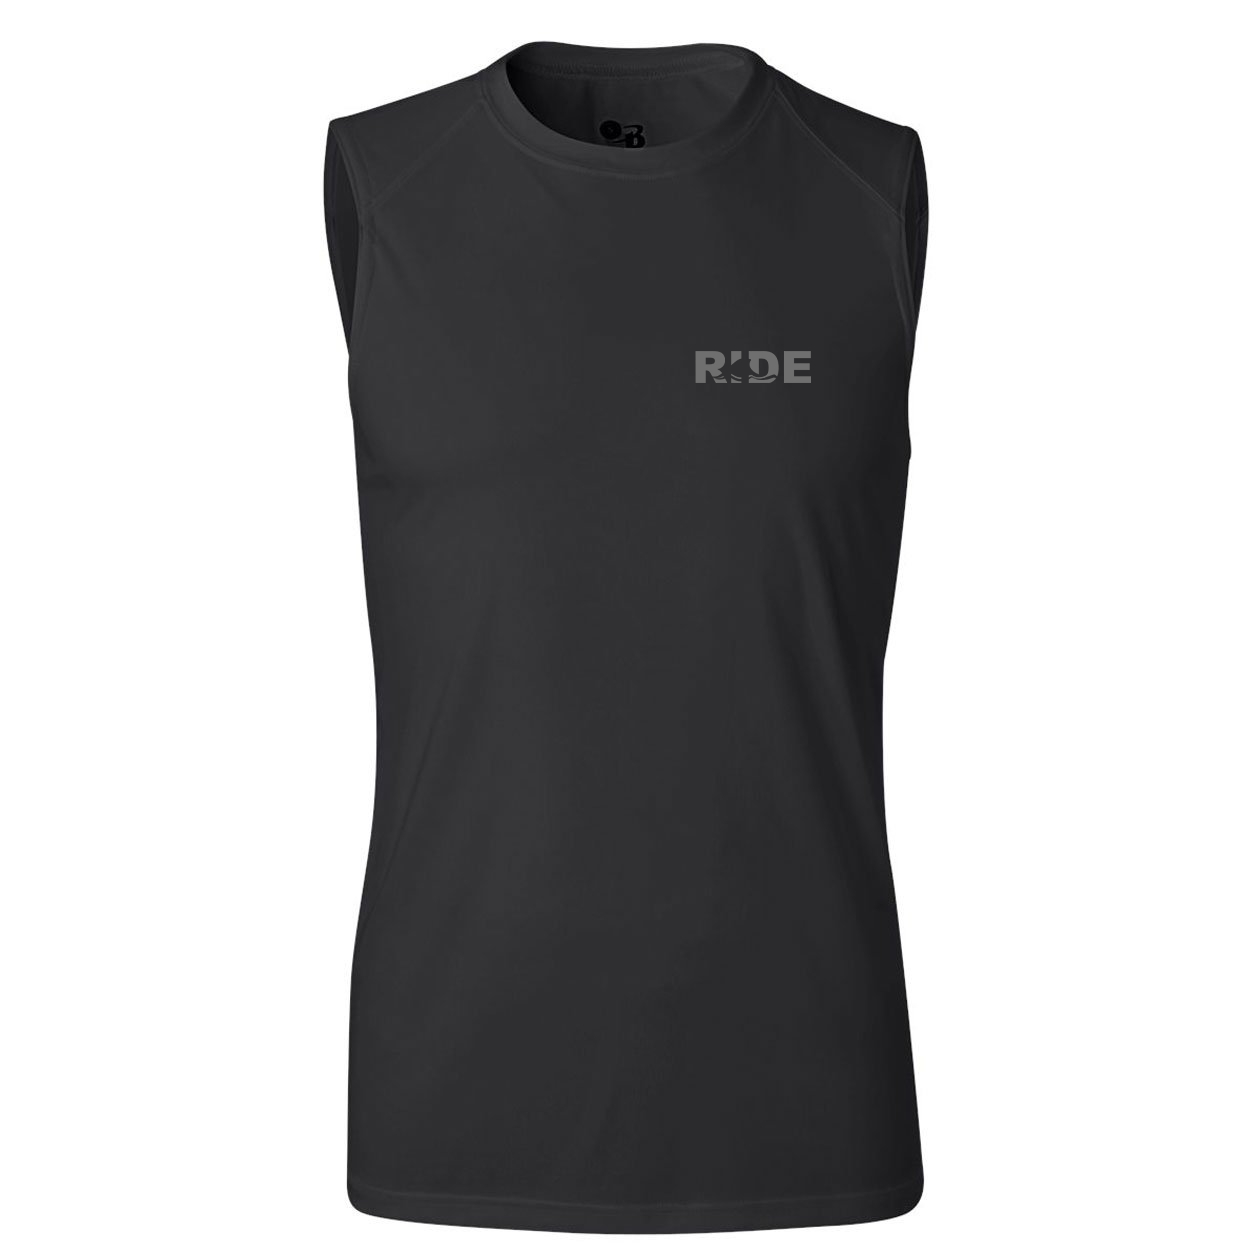 Ride Wave Logo Night Out Unisex Performance Sleeveless T-Shirt Black (Gray Logo)